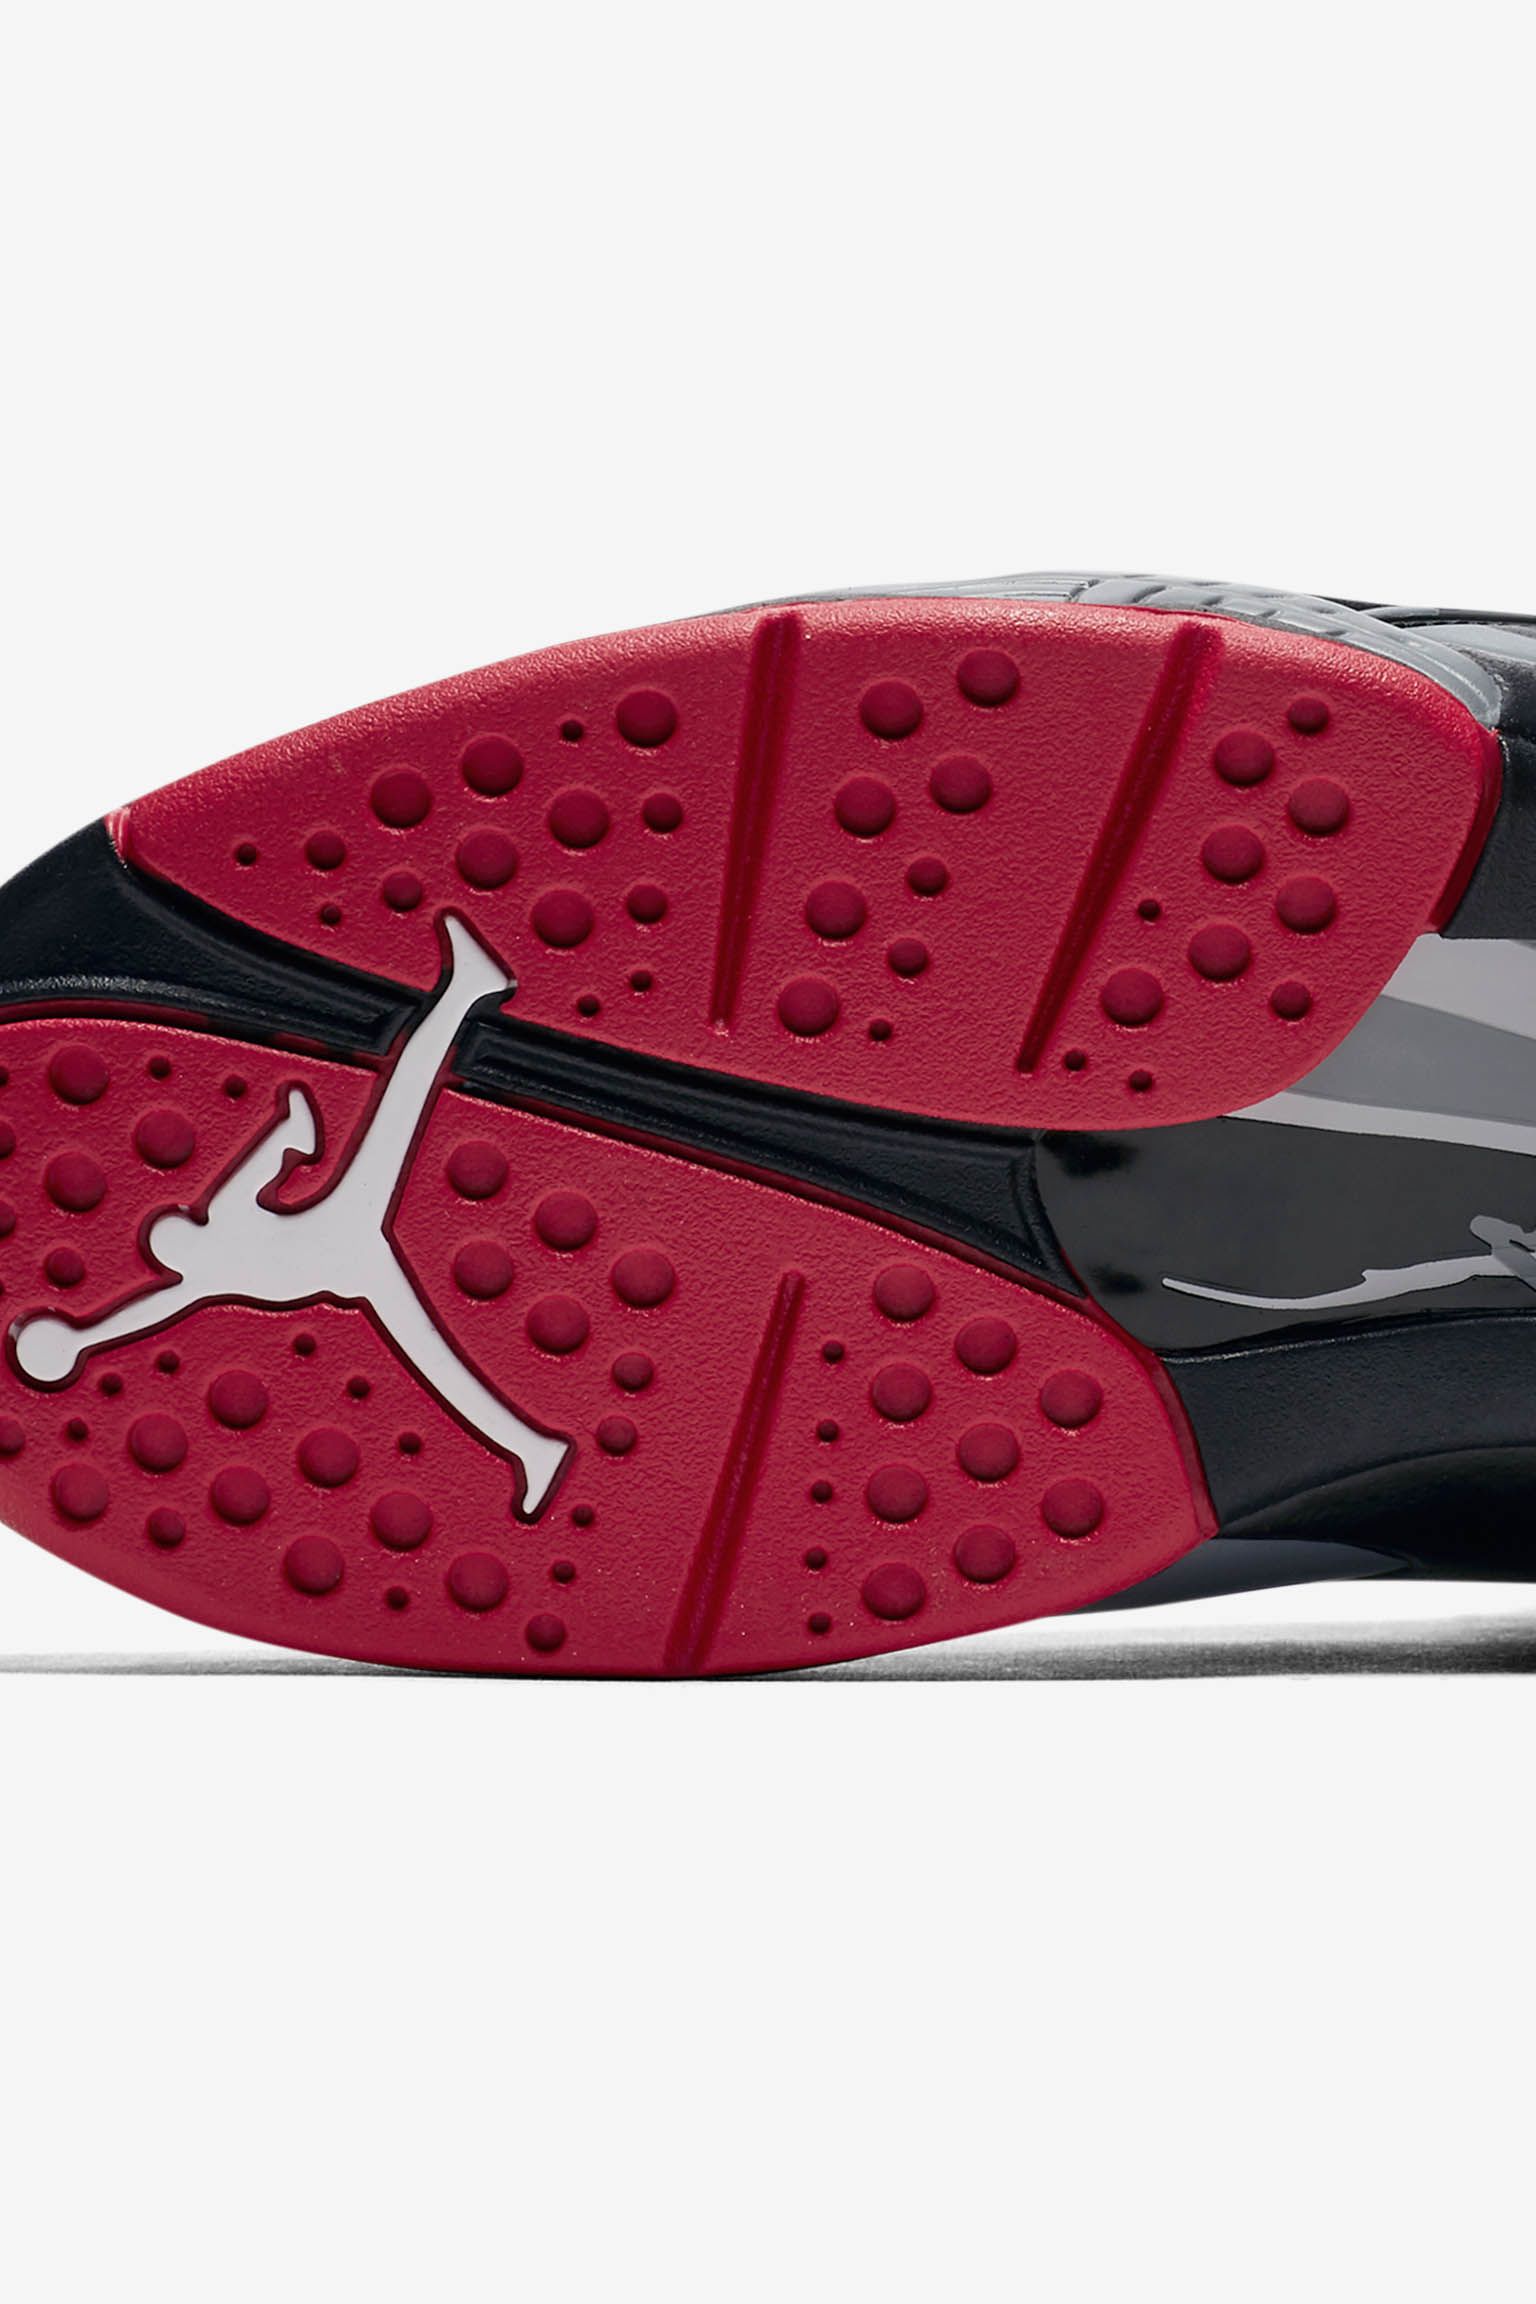 Reproducere sangtekster Ups Air Jordan 8 Retro 'Black & Gym Red' Release Date. Nike SNKRS